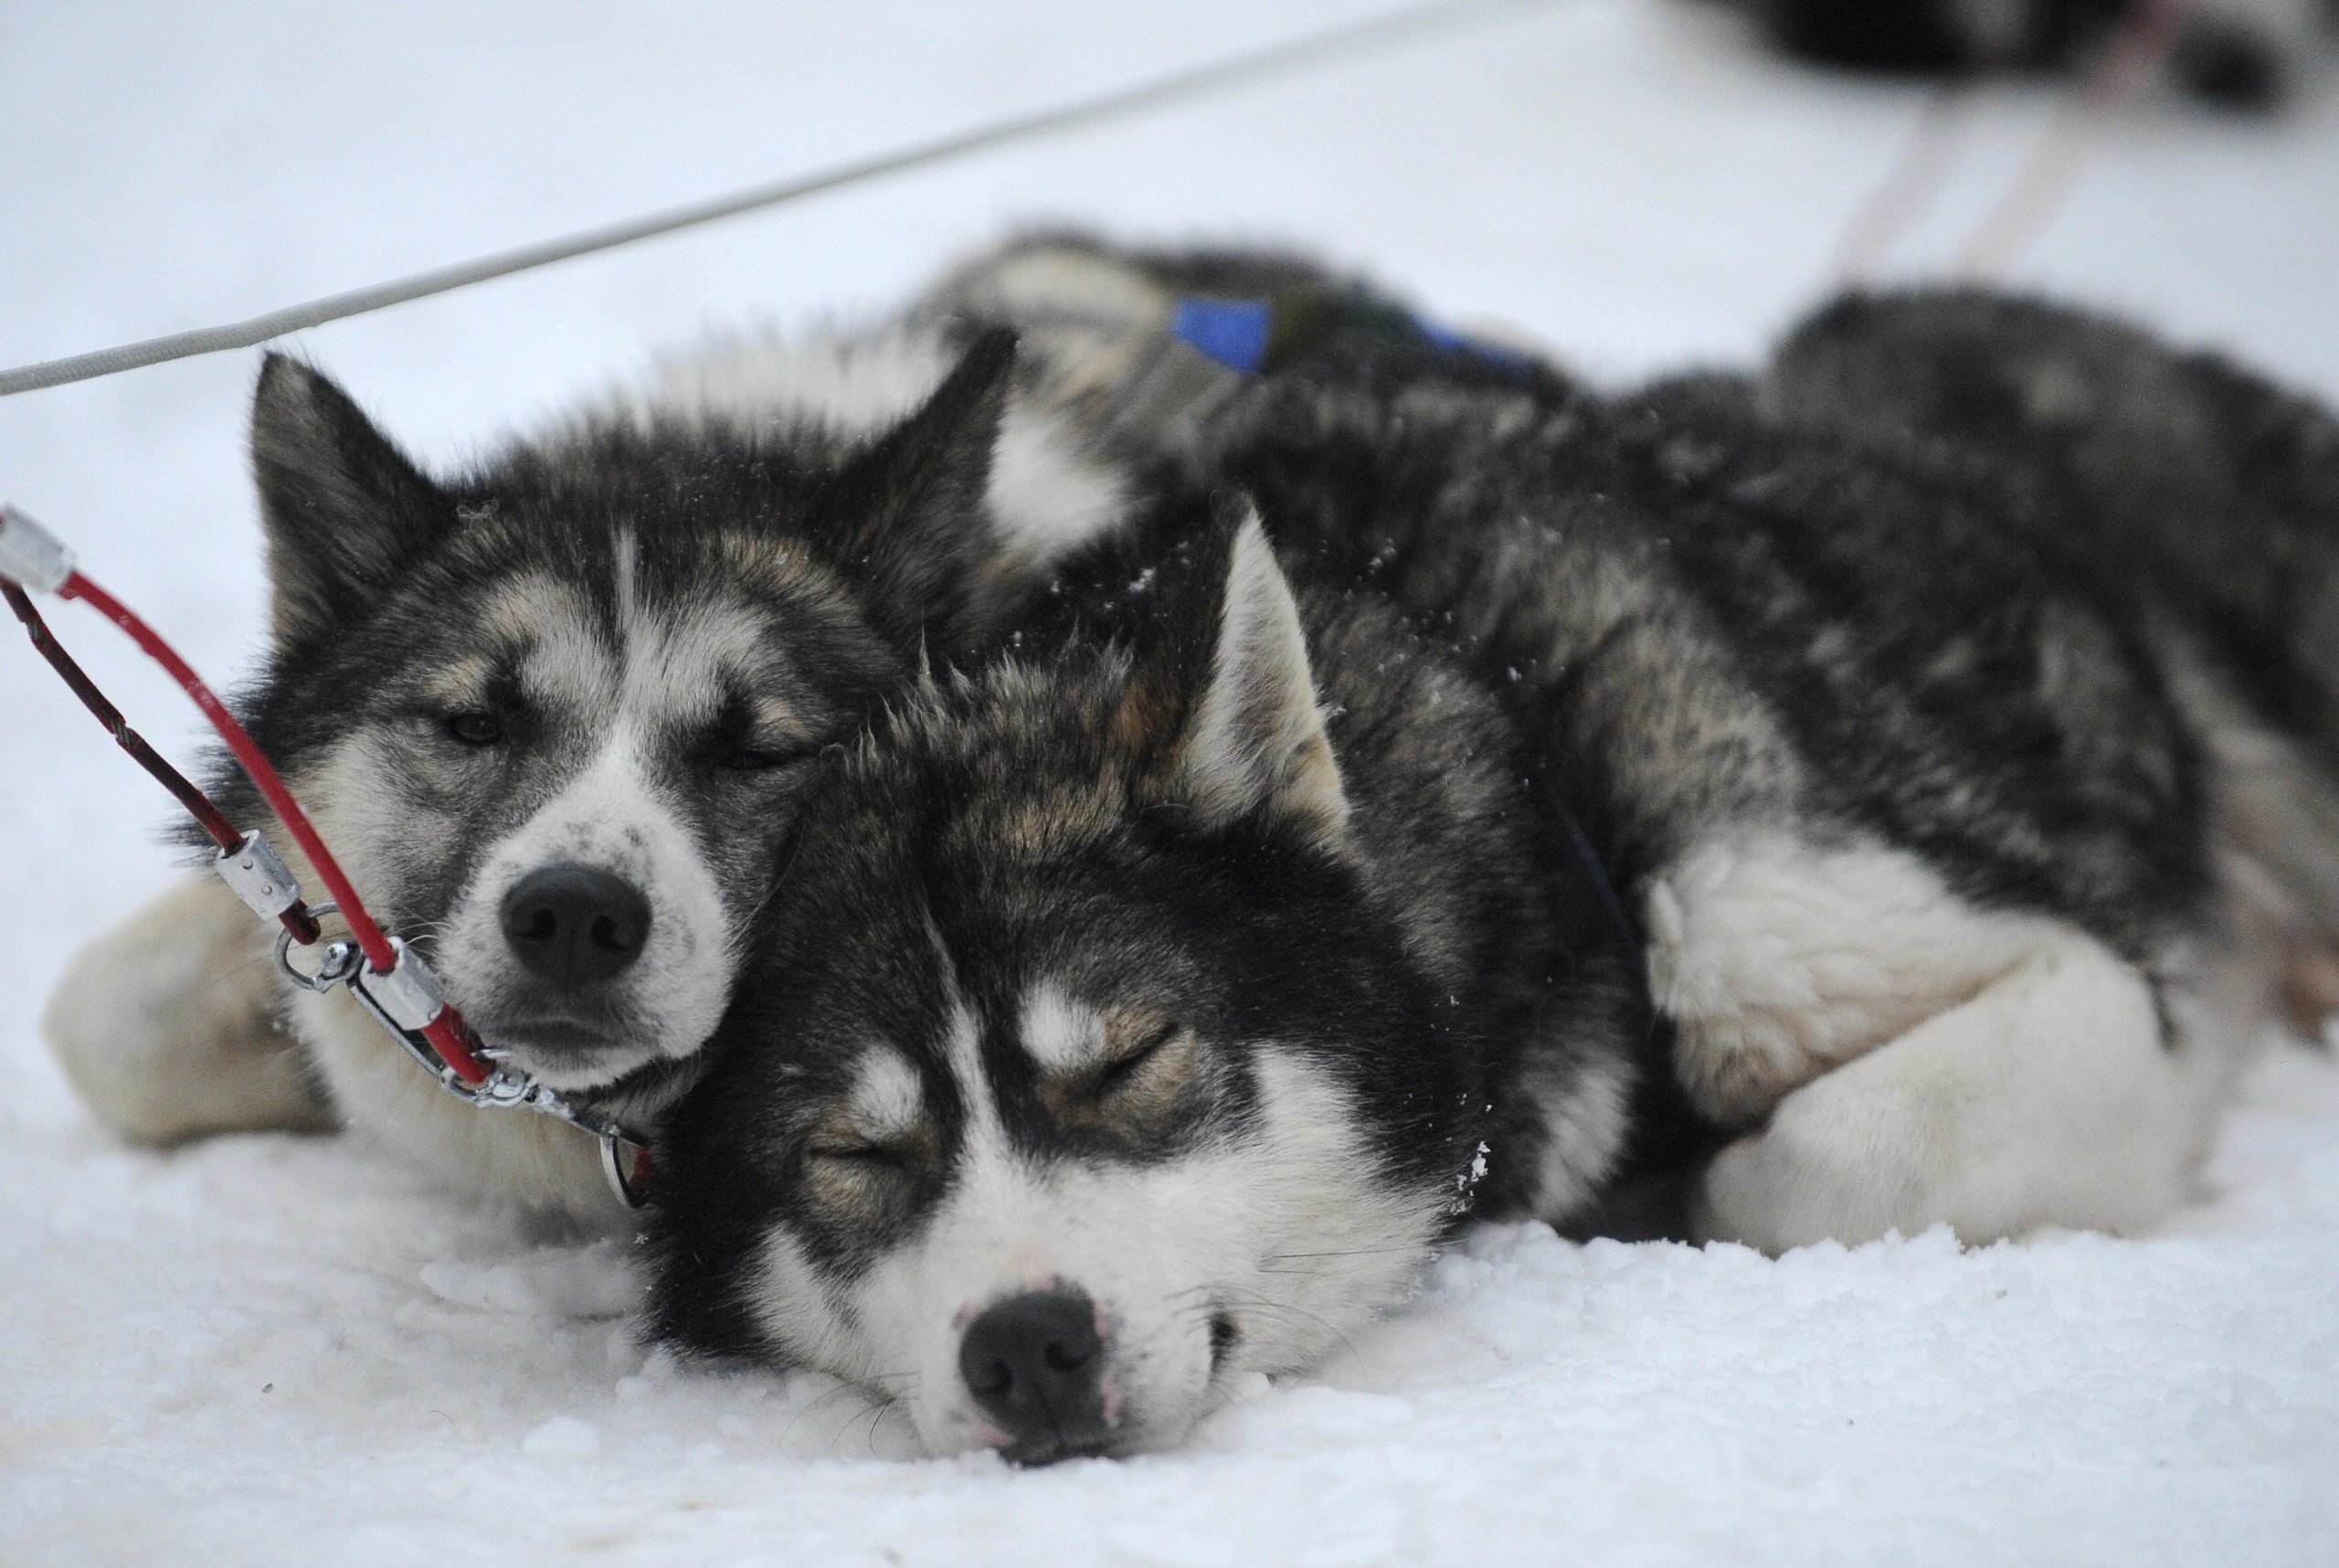 Siberian Huskies rest in the snow